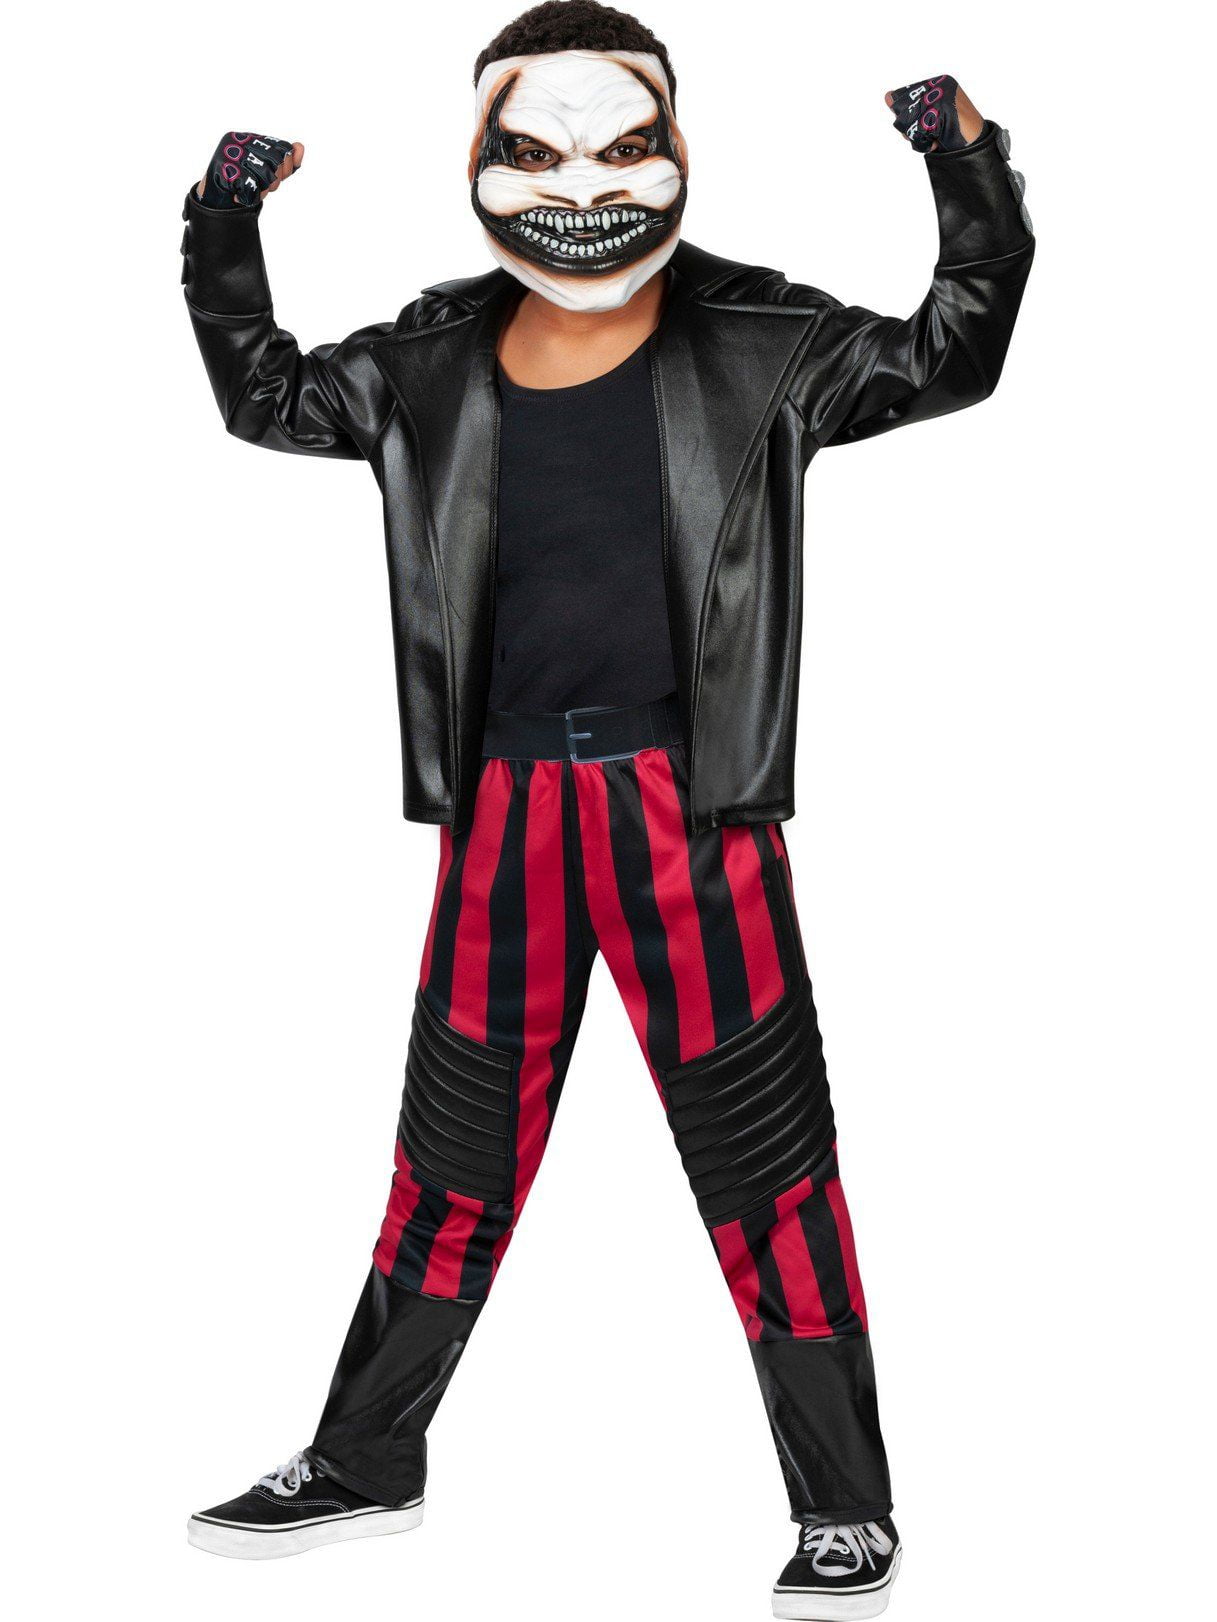 WWE Bray Wyatt The Fiend Child Costume